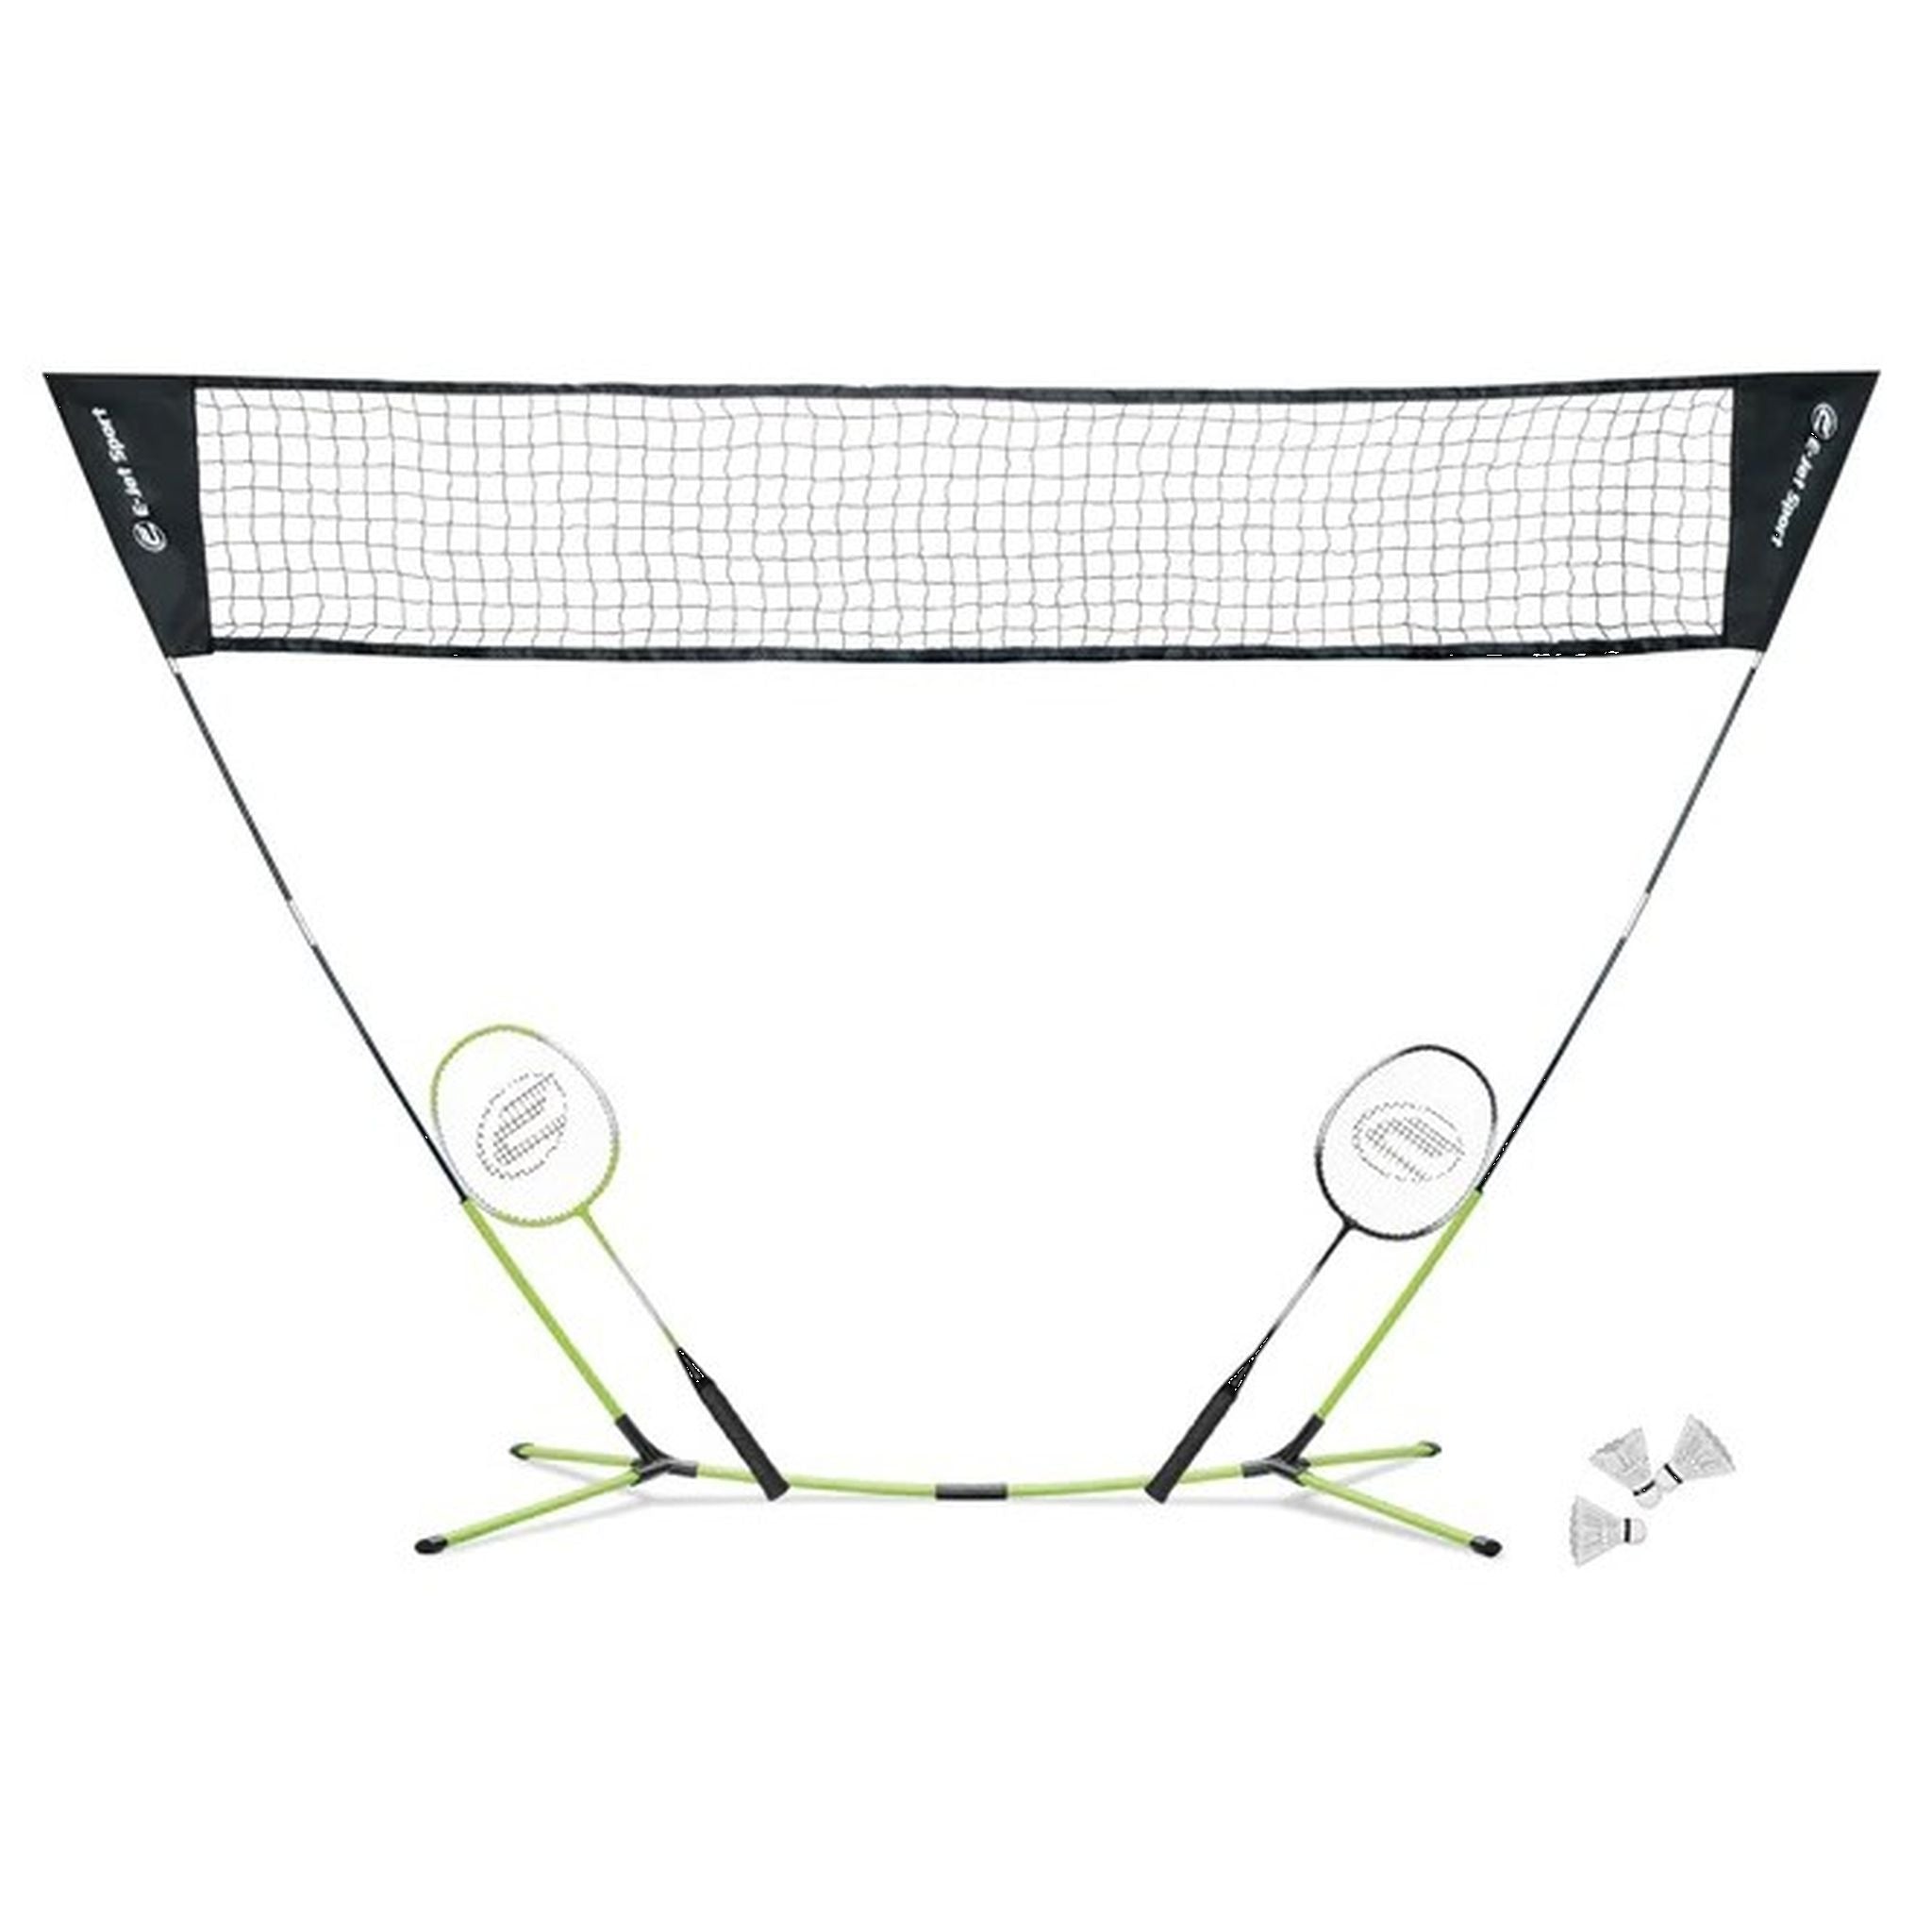 E-JET 2 Player Badminton Set with Net